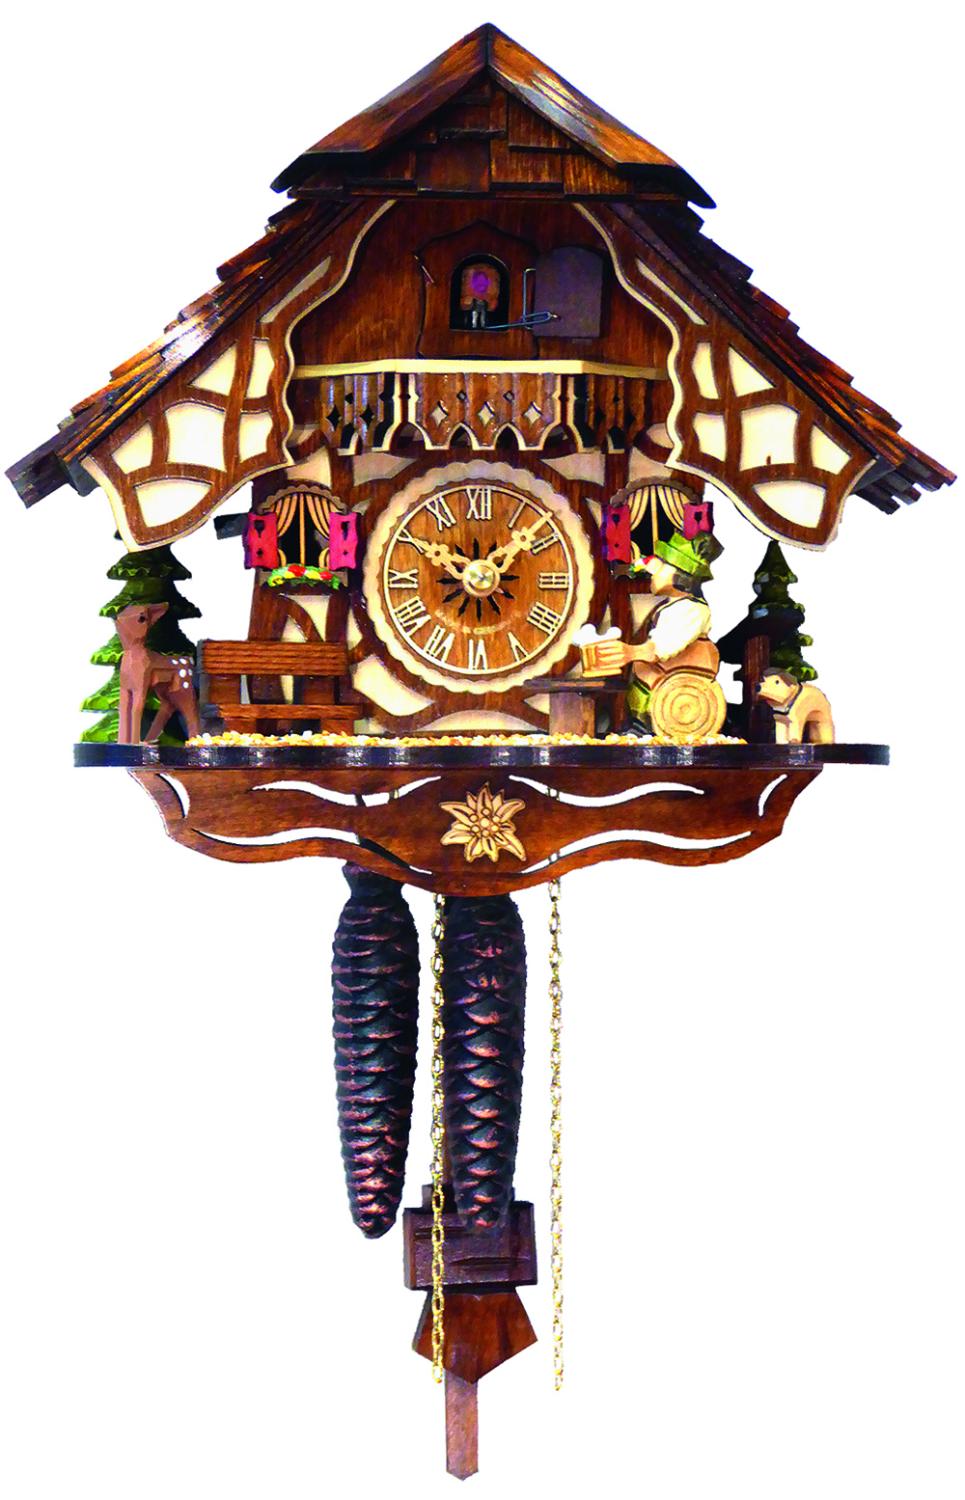 Engstler Weight-driven Cuckoo Clock - Full Size